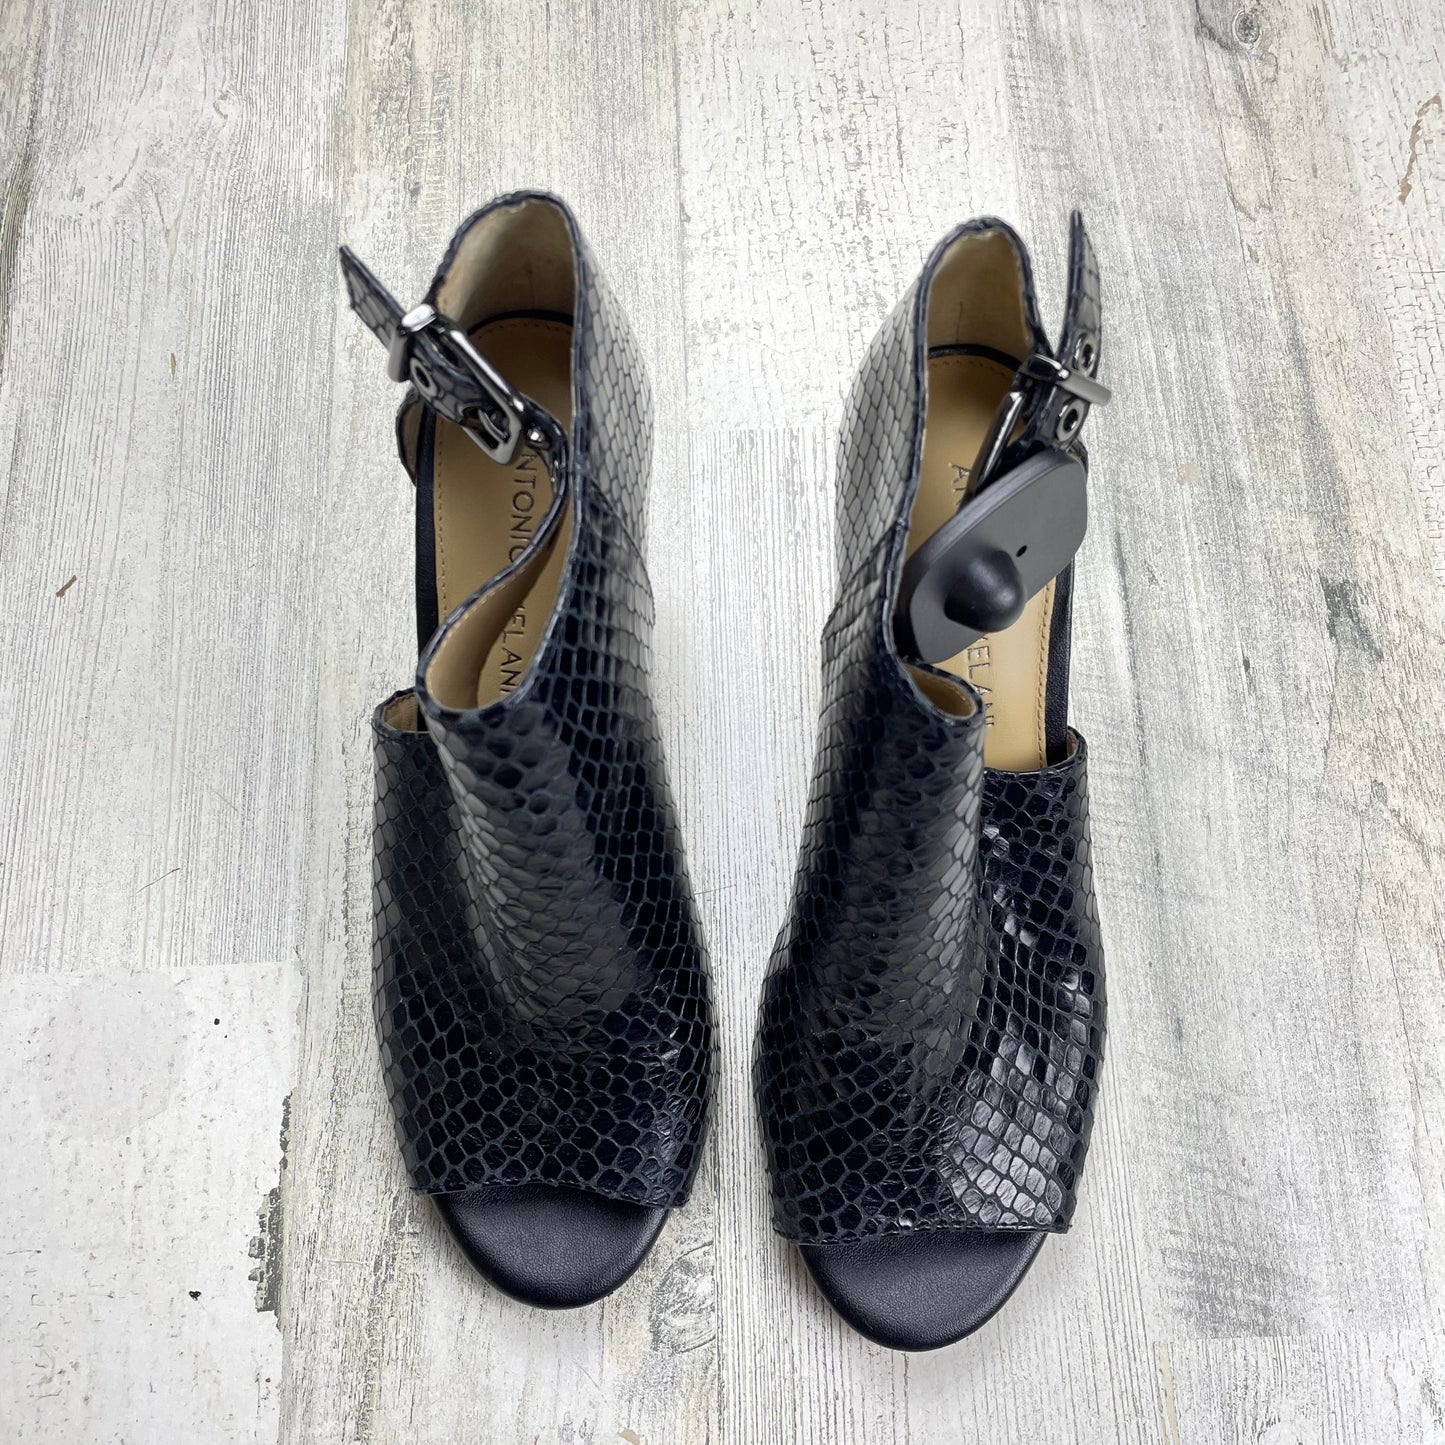 Sandals Heels Stiletto By Antonio Melani  Size: 7